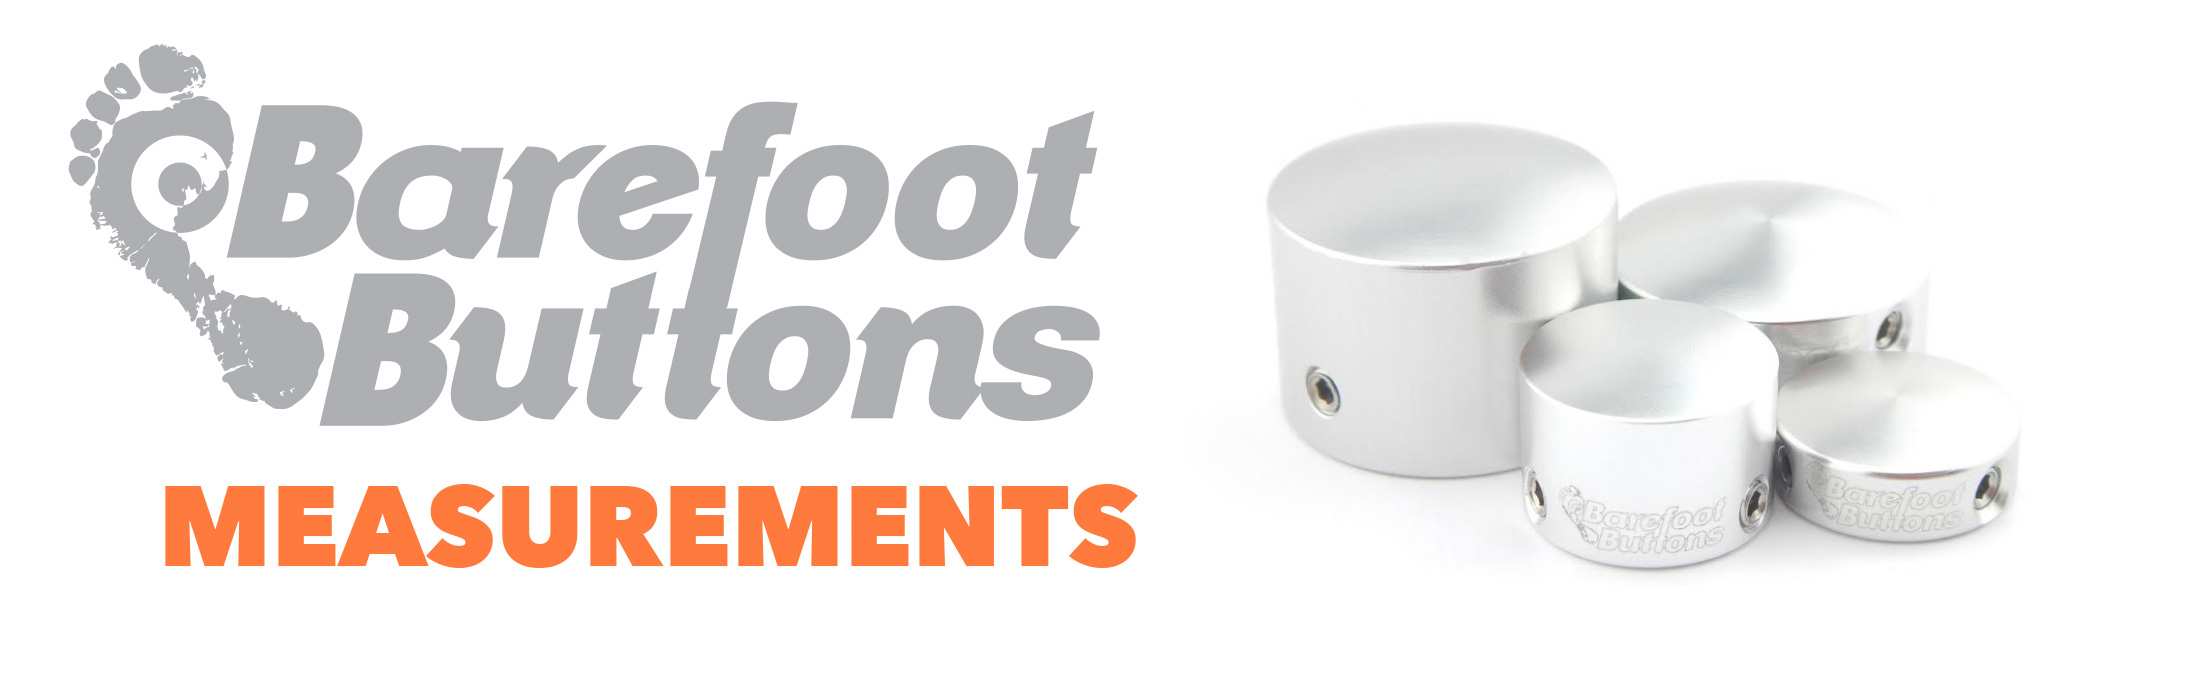 Barefoot Buttons - Measurements header